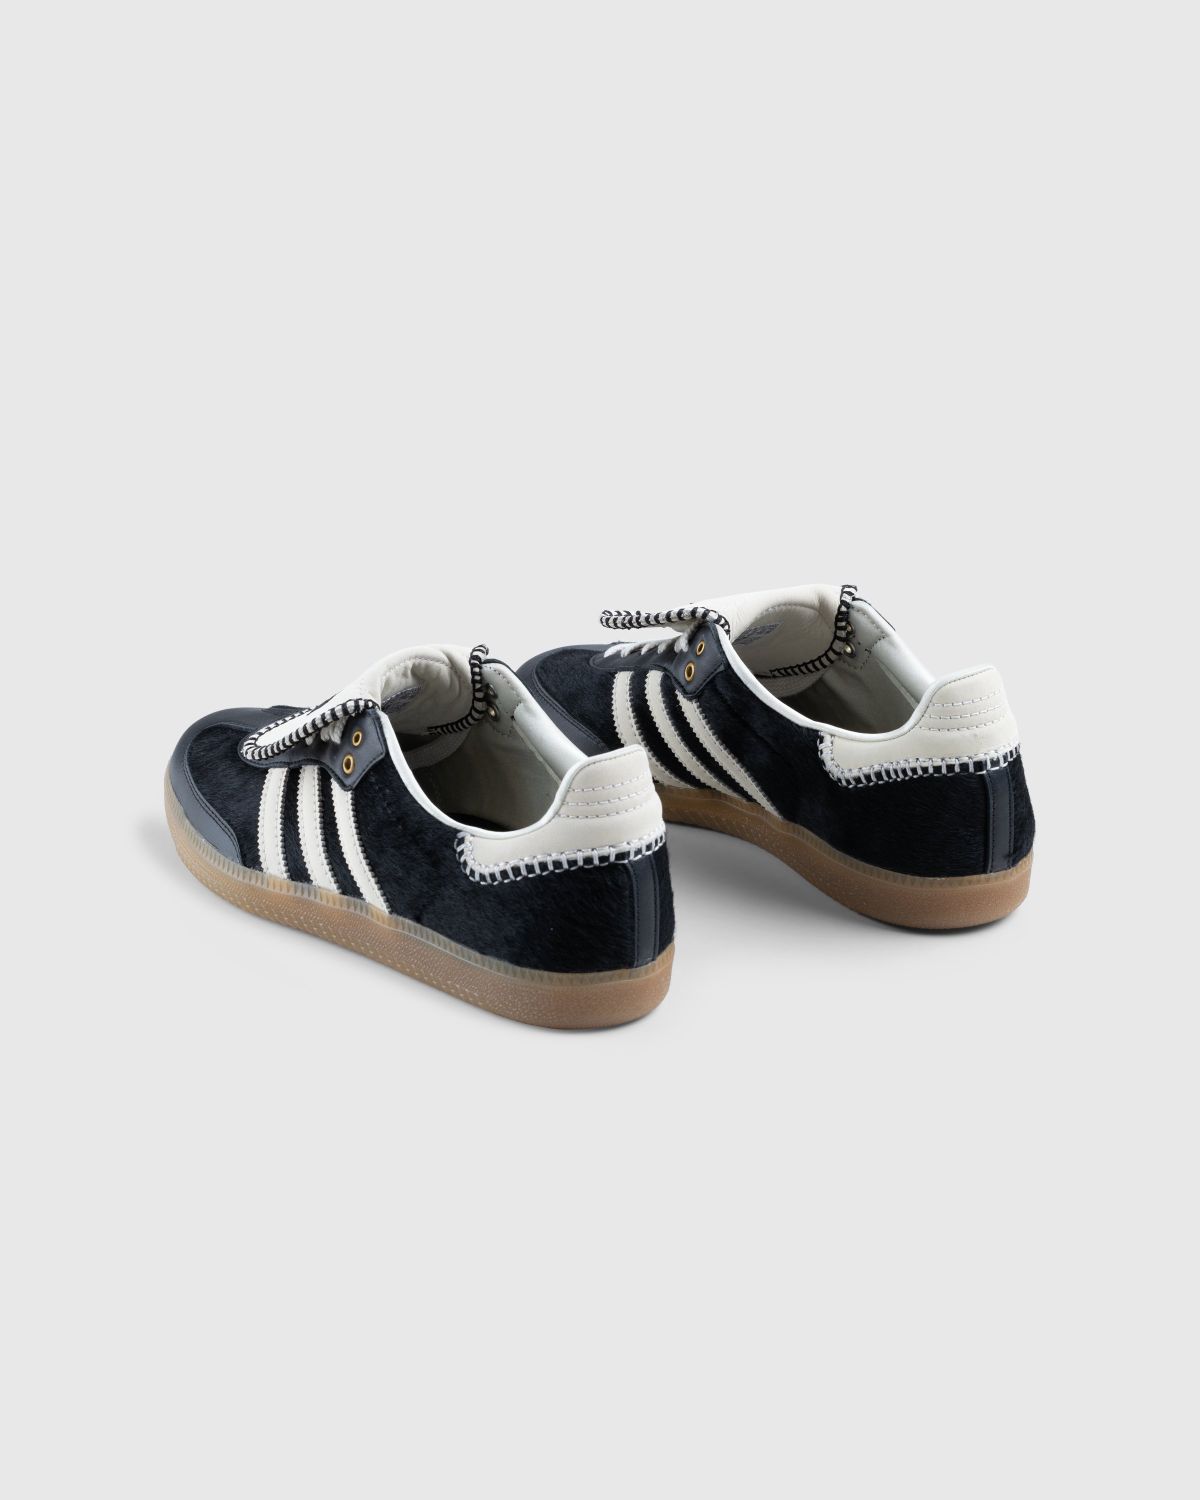 Adidas x Wales Bonner – Pony Tonal Samba Core Black/Cream White - Sneakers - Black - Image 4